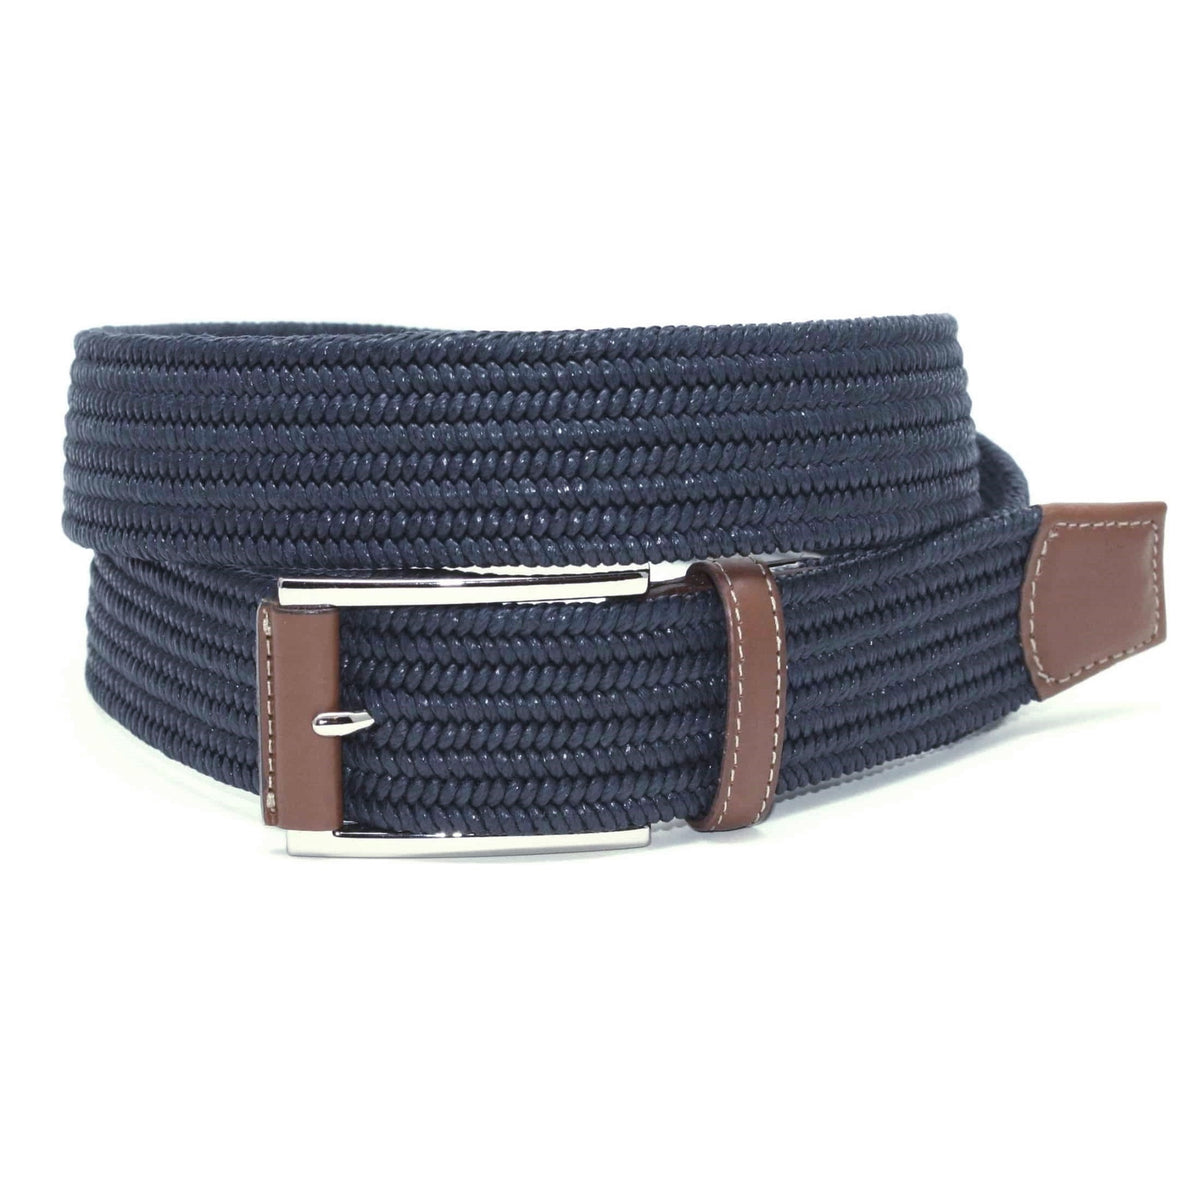 Italian Braided Leather Cording Casual Belt in Black & Cognac Reg. SIZE:32